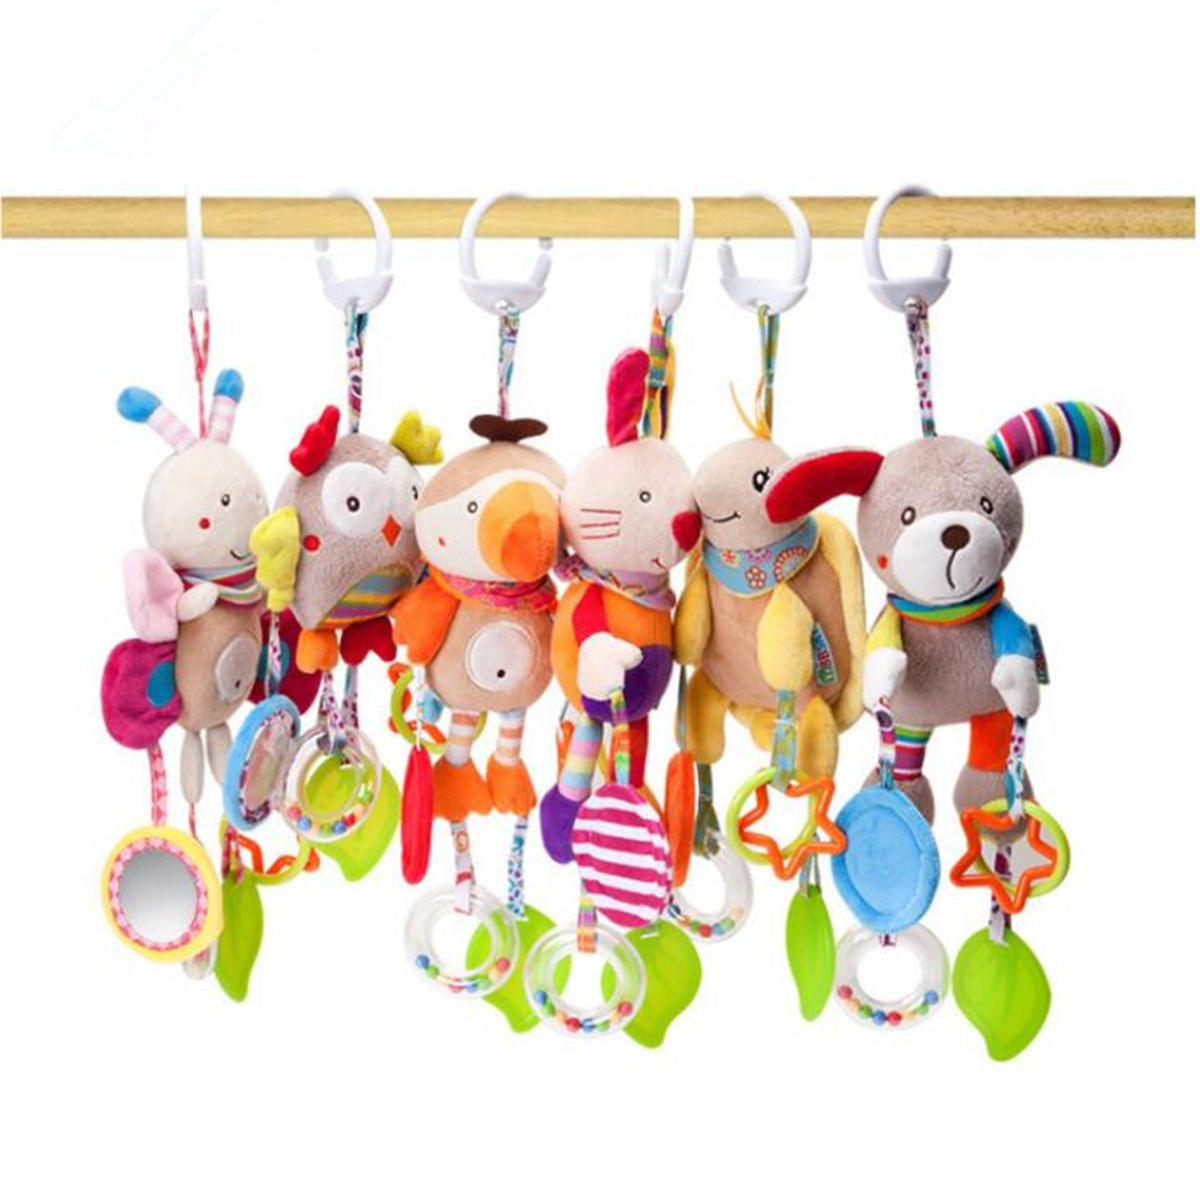 

Baby Cute Cotton Rattles Infant Animal Hand Bell Kids Plush Toys Boy Girls